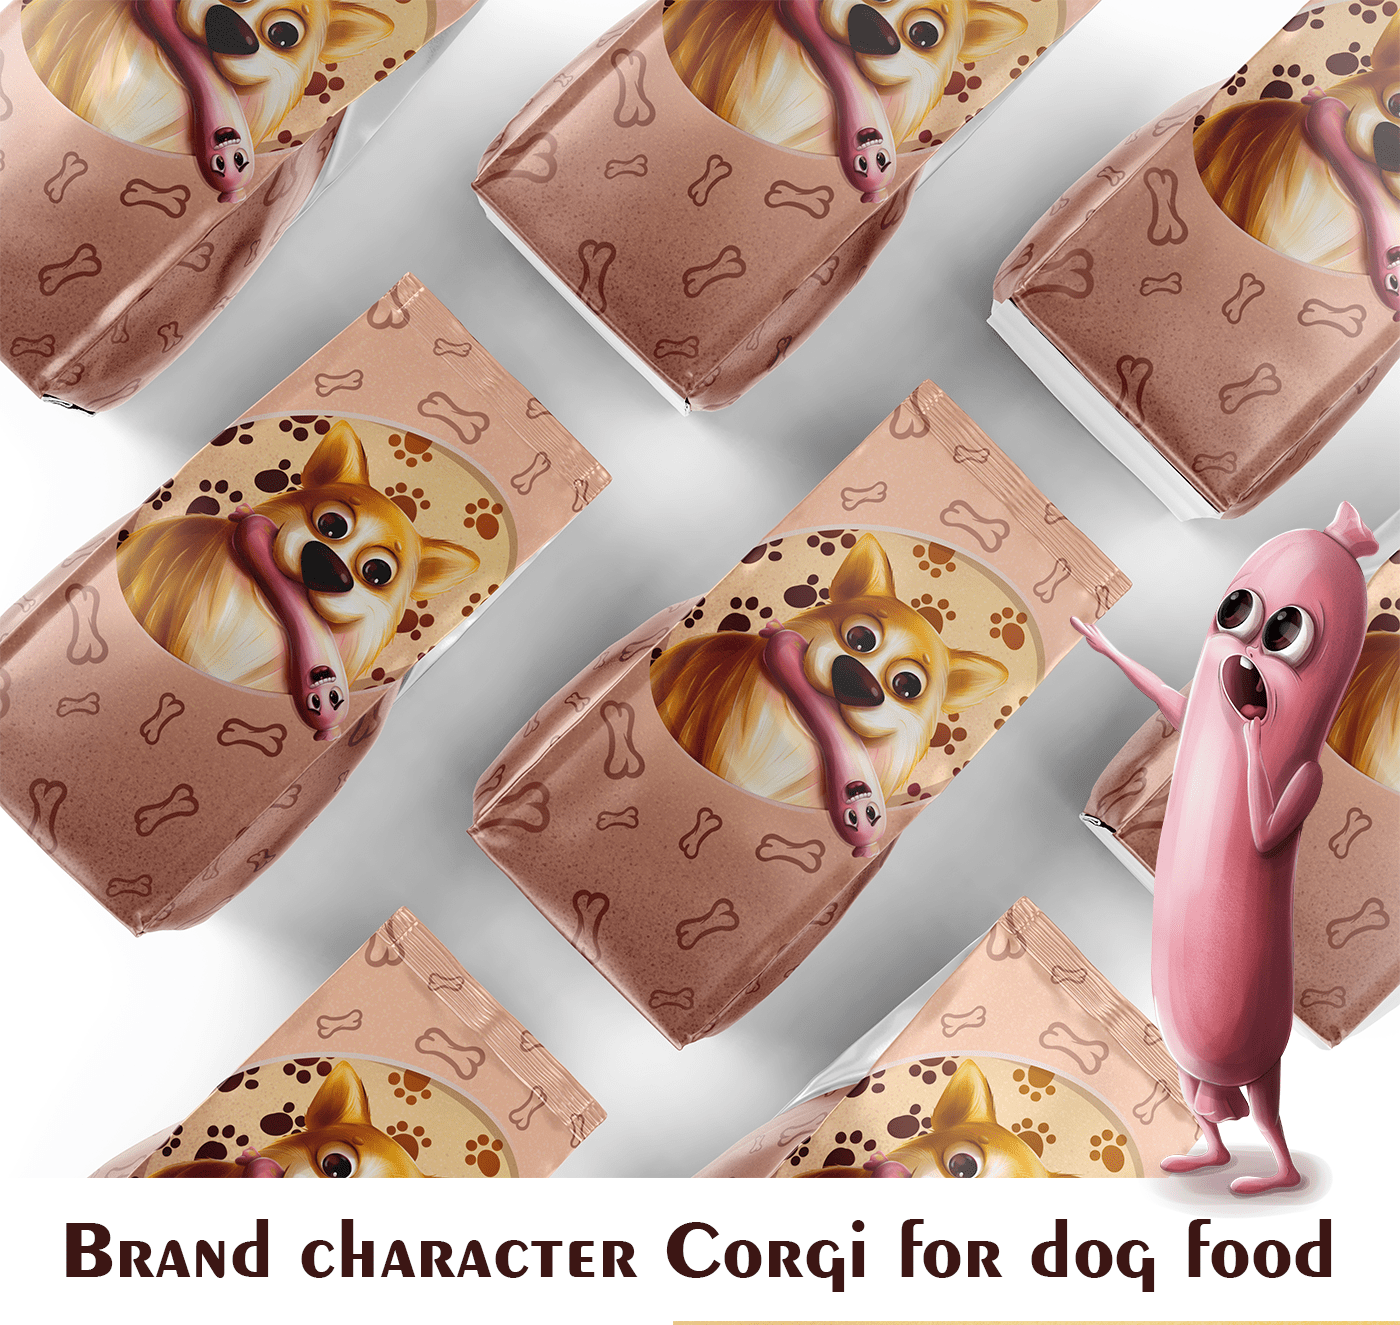 baby illustration book illustration brand character Corgi digital illustration dog food for dogs дизайн упаковки